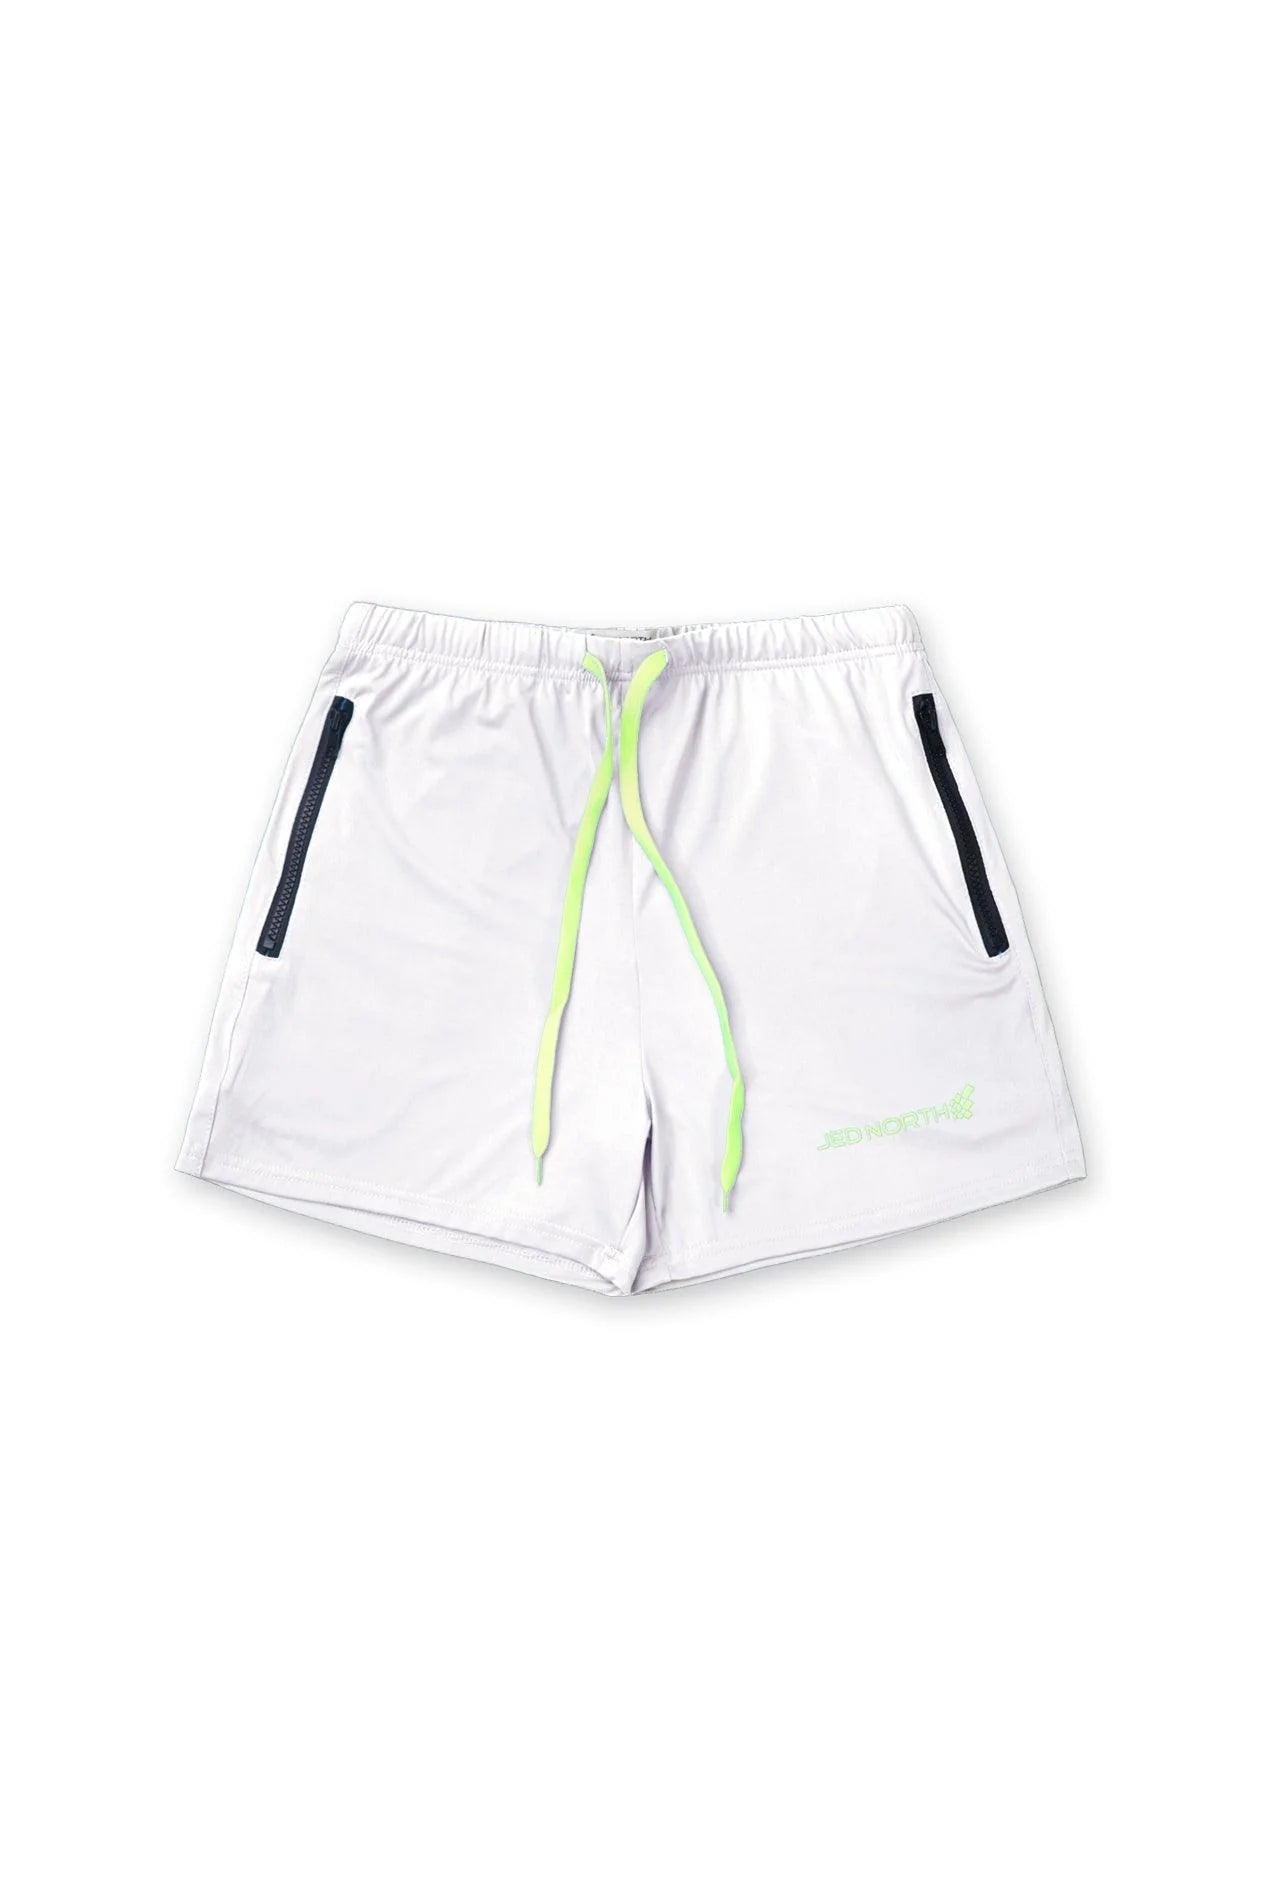 Jed North Agile 4" gym short w/zipper pockets white